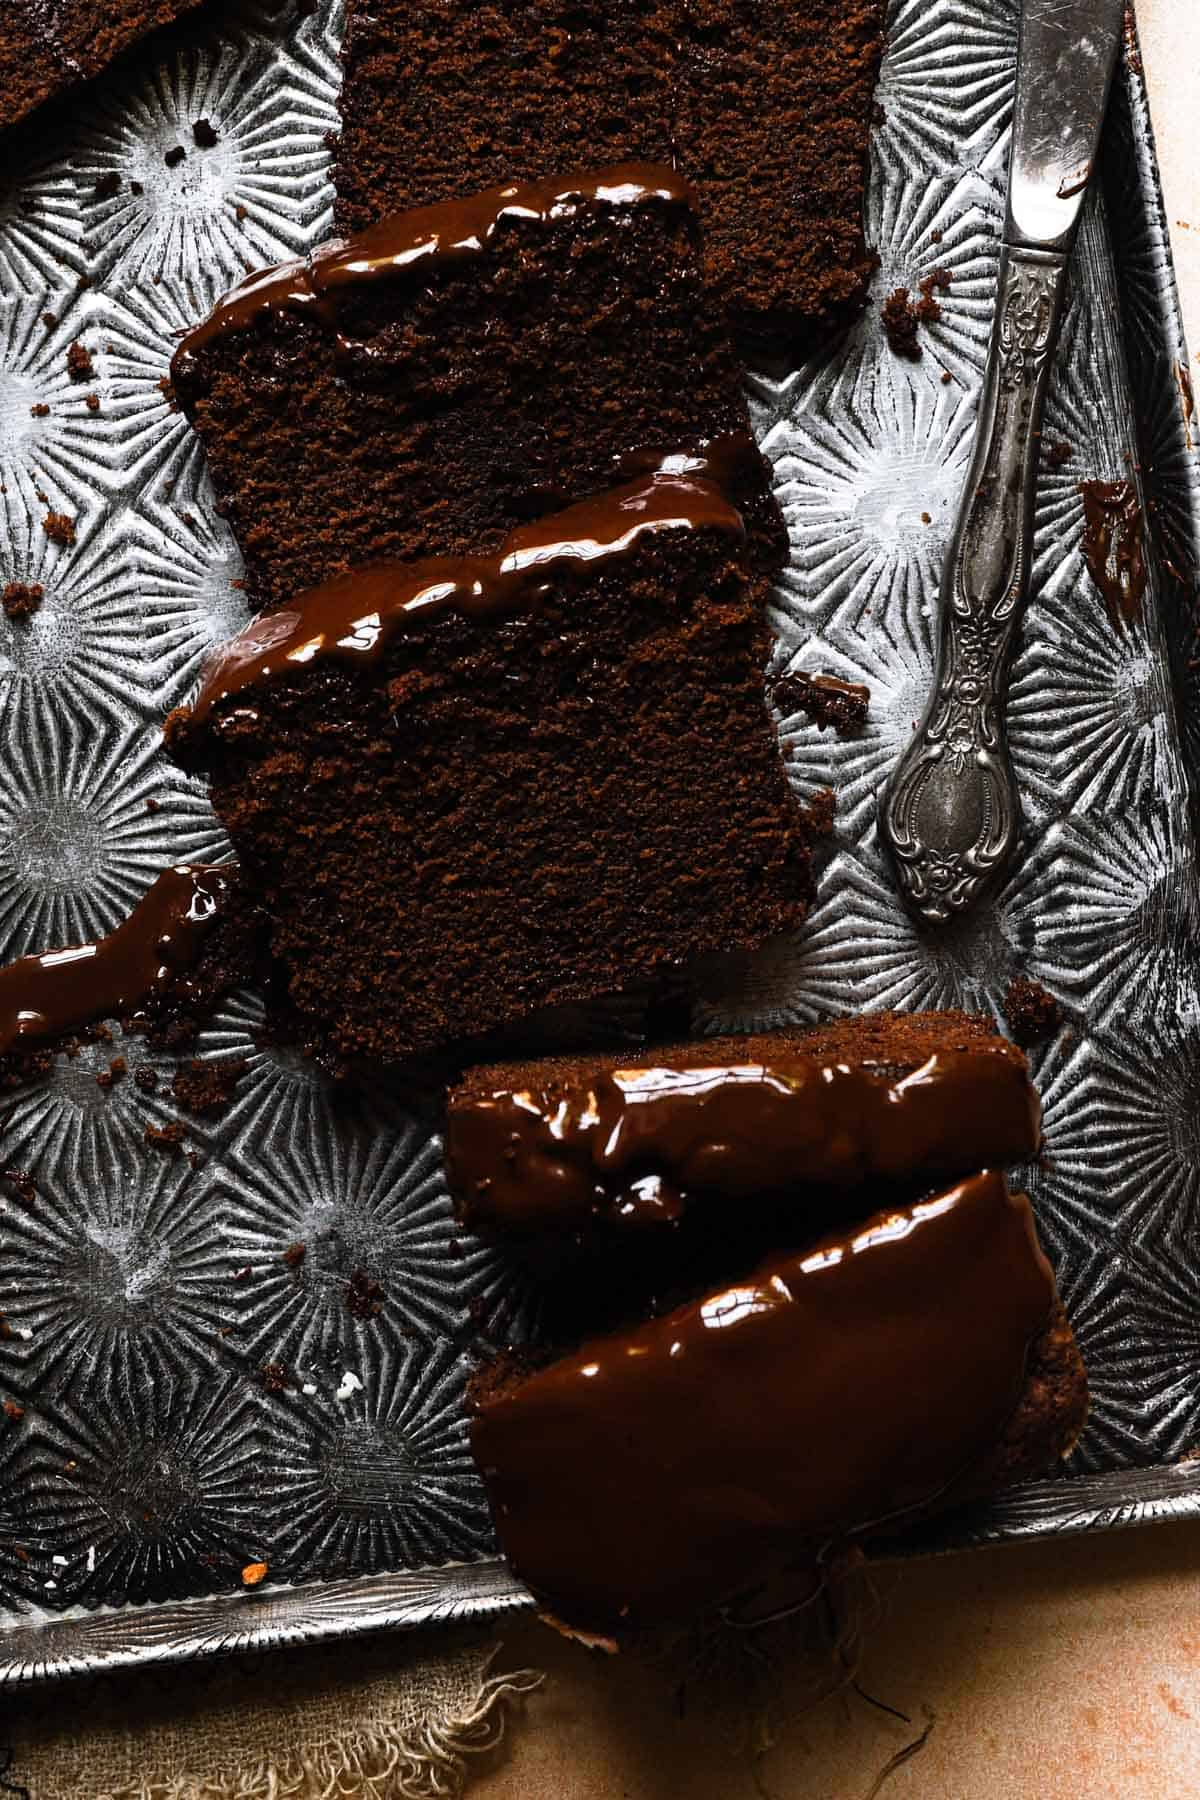 Sliced chocolate cake on a tray with a knife